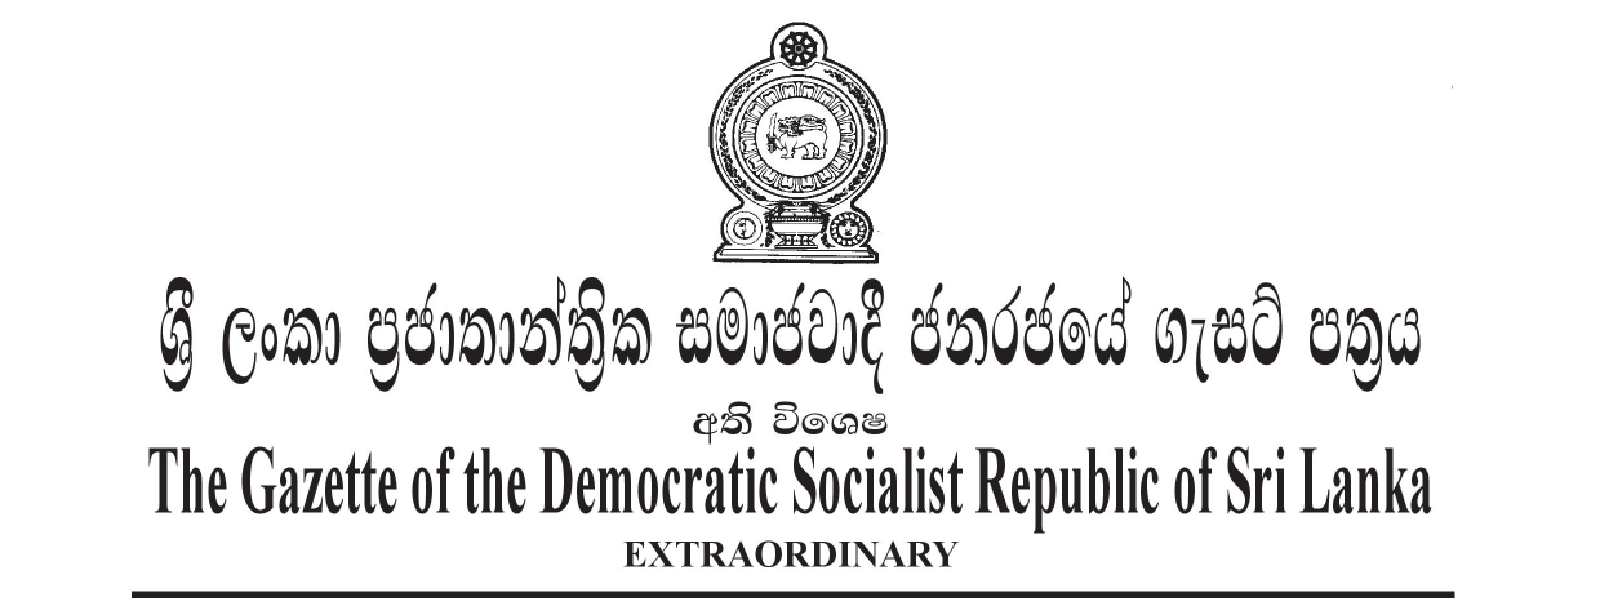 Sri Lanka Electricity Bill Published in Gazette